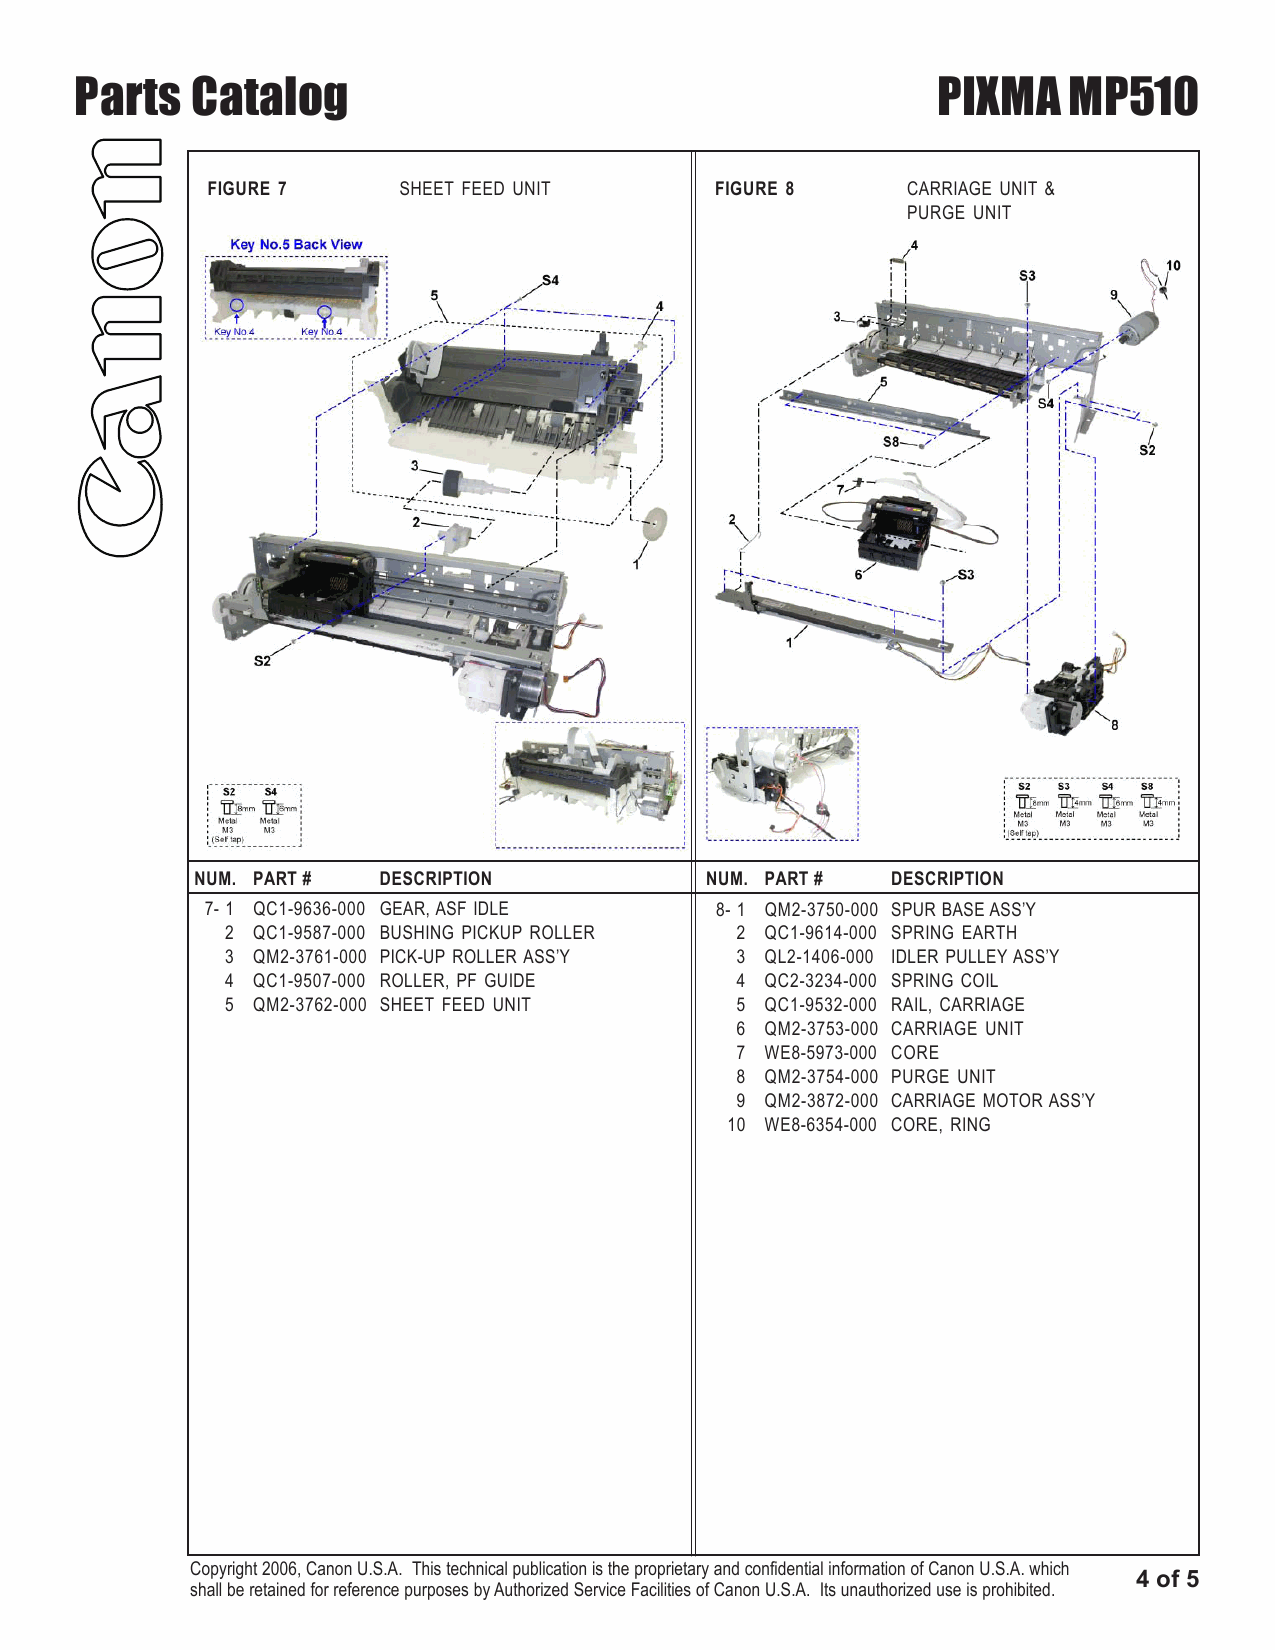 Canon PIXMA MP510 Parts Catalog Manual-5